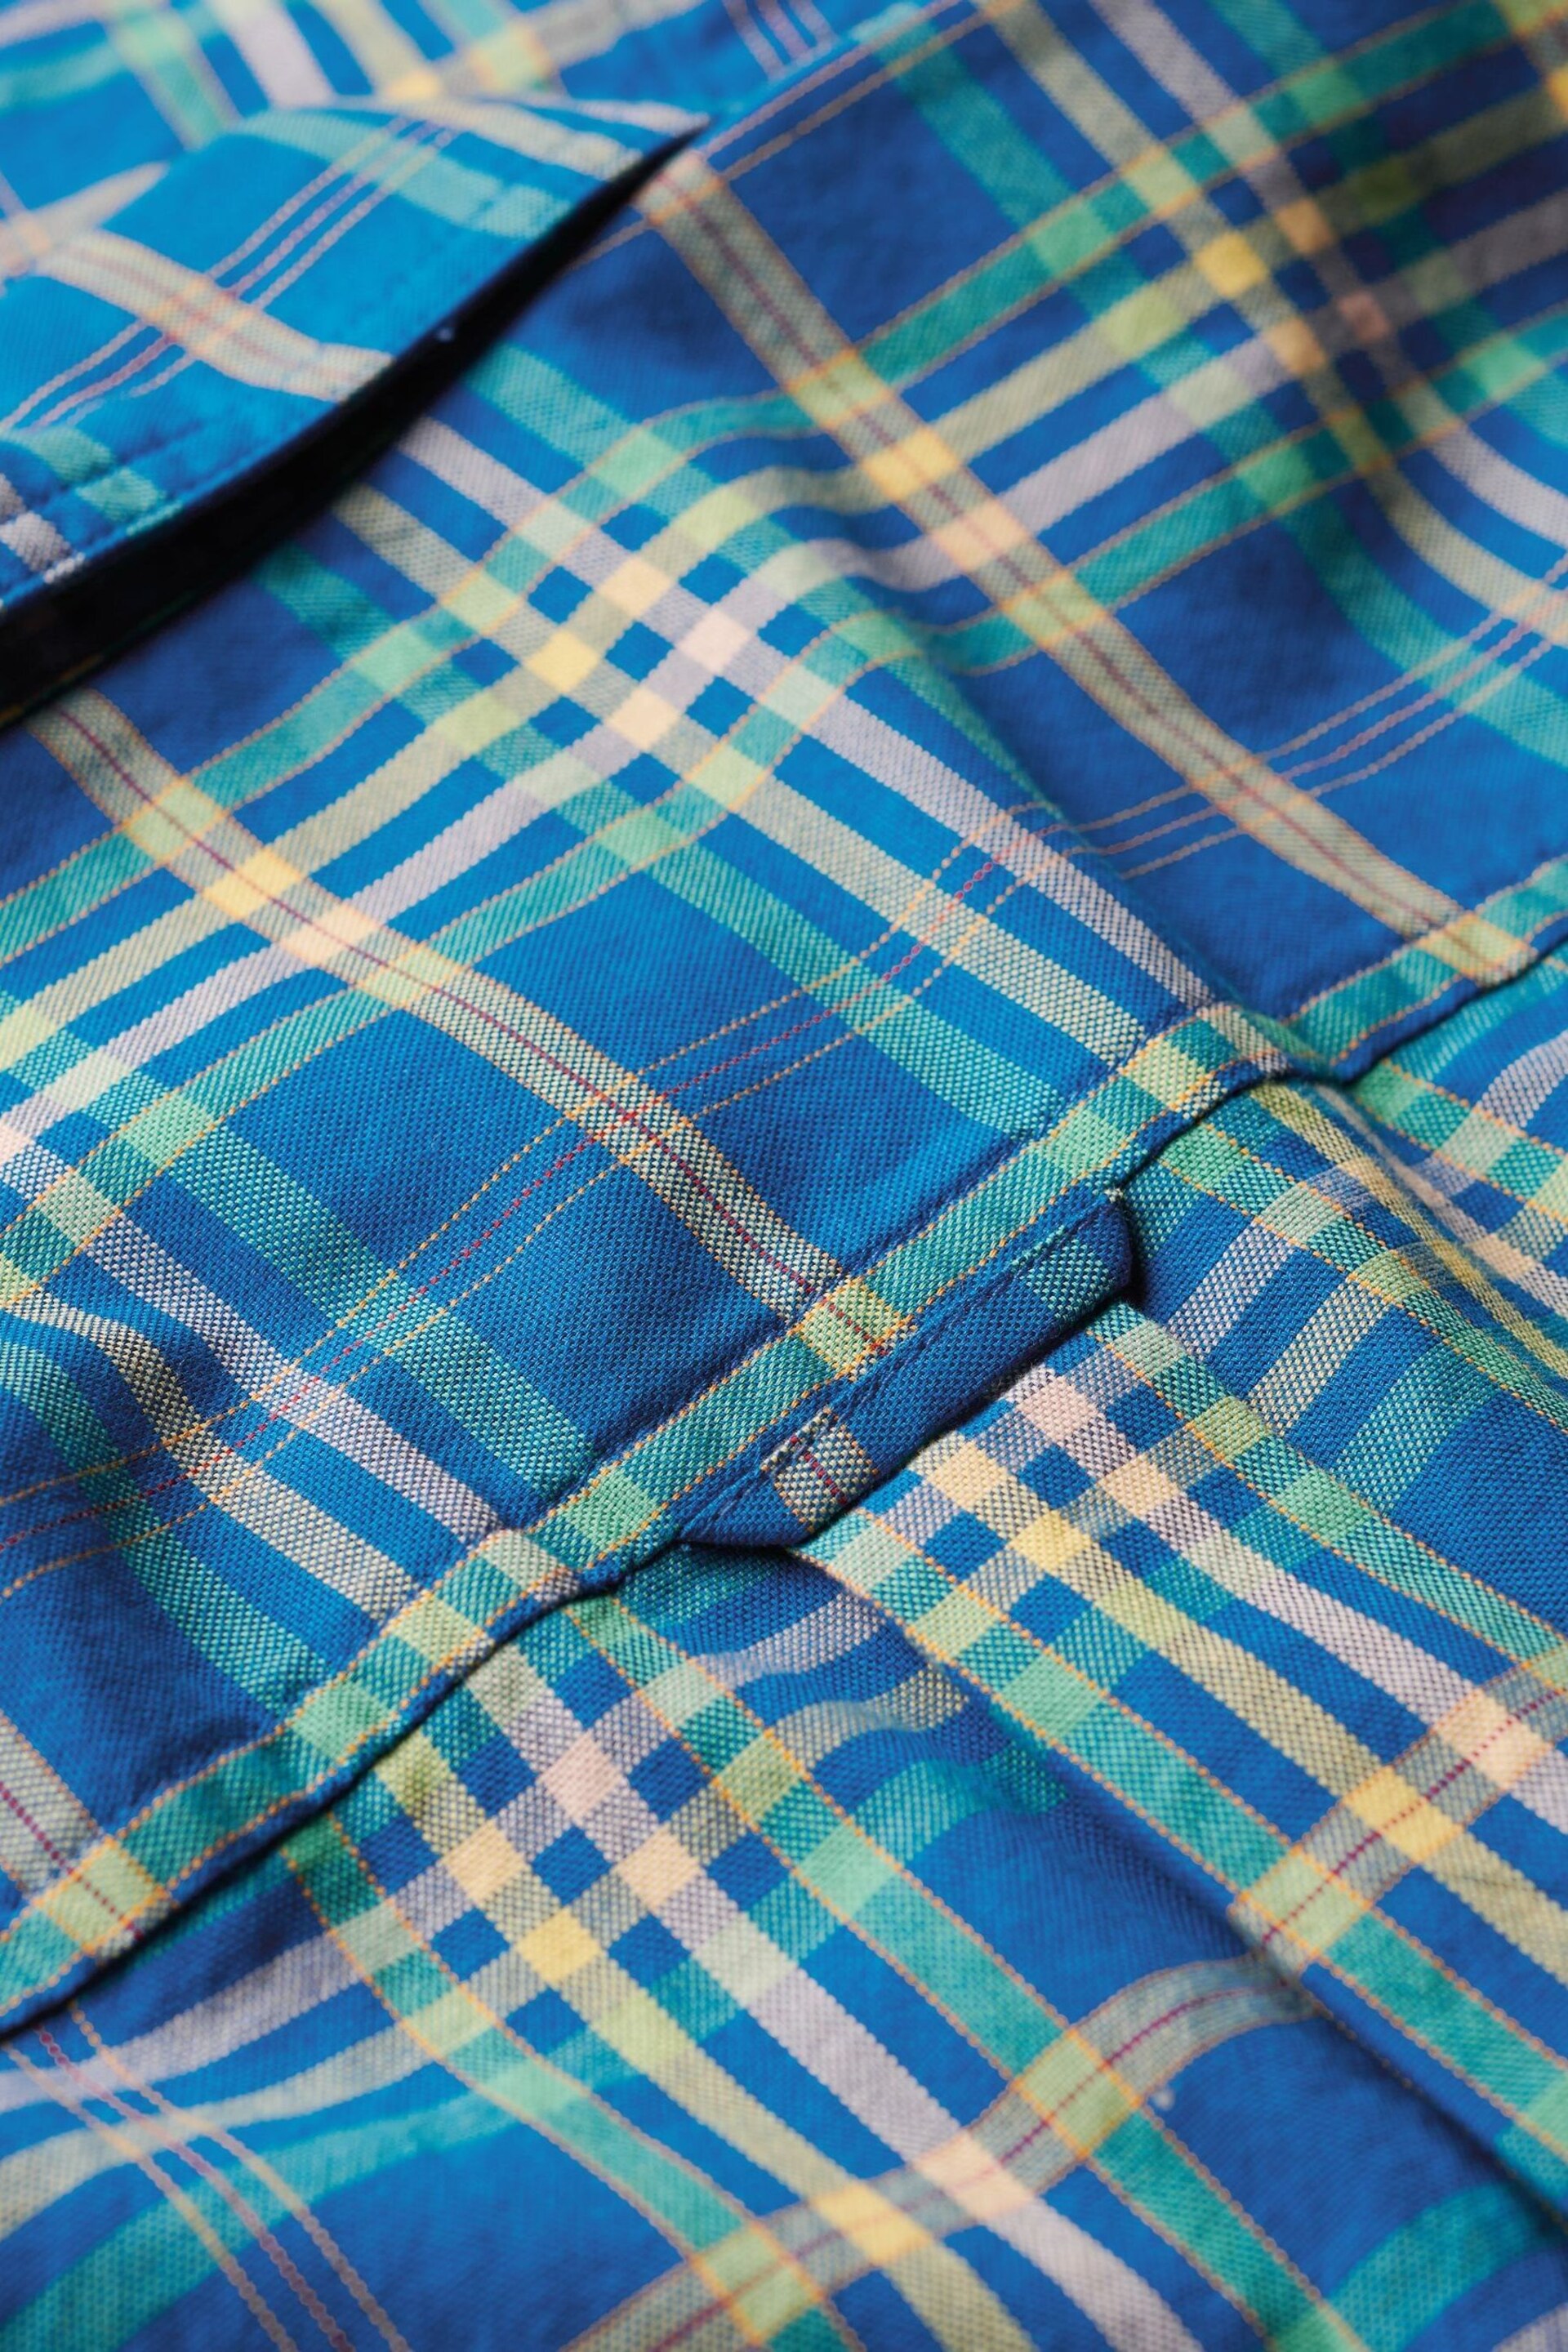 Superdry Blue Lightweight Check Shirt - Image 5 of 6